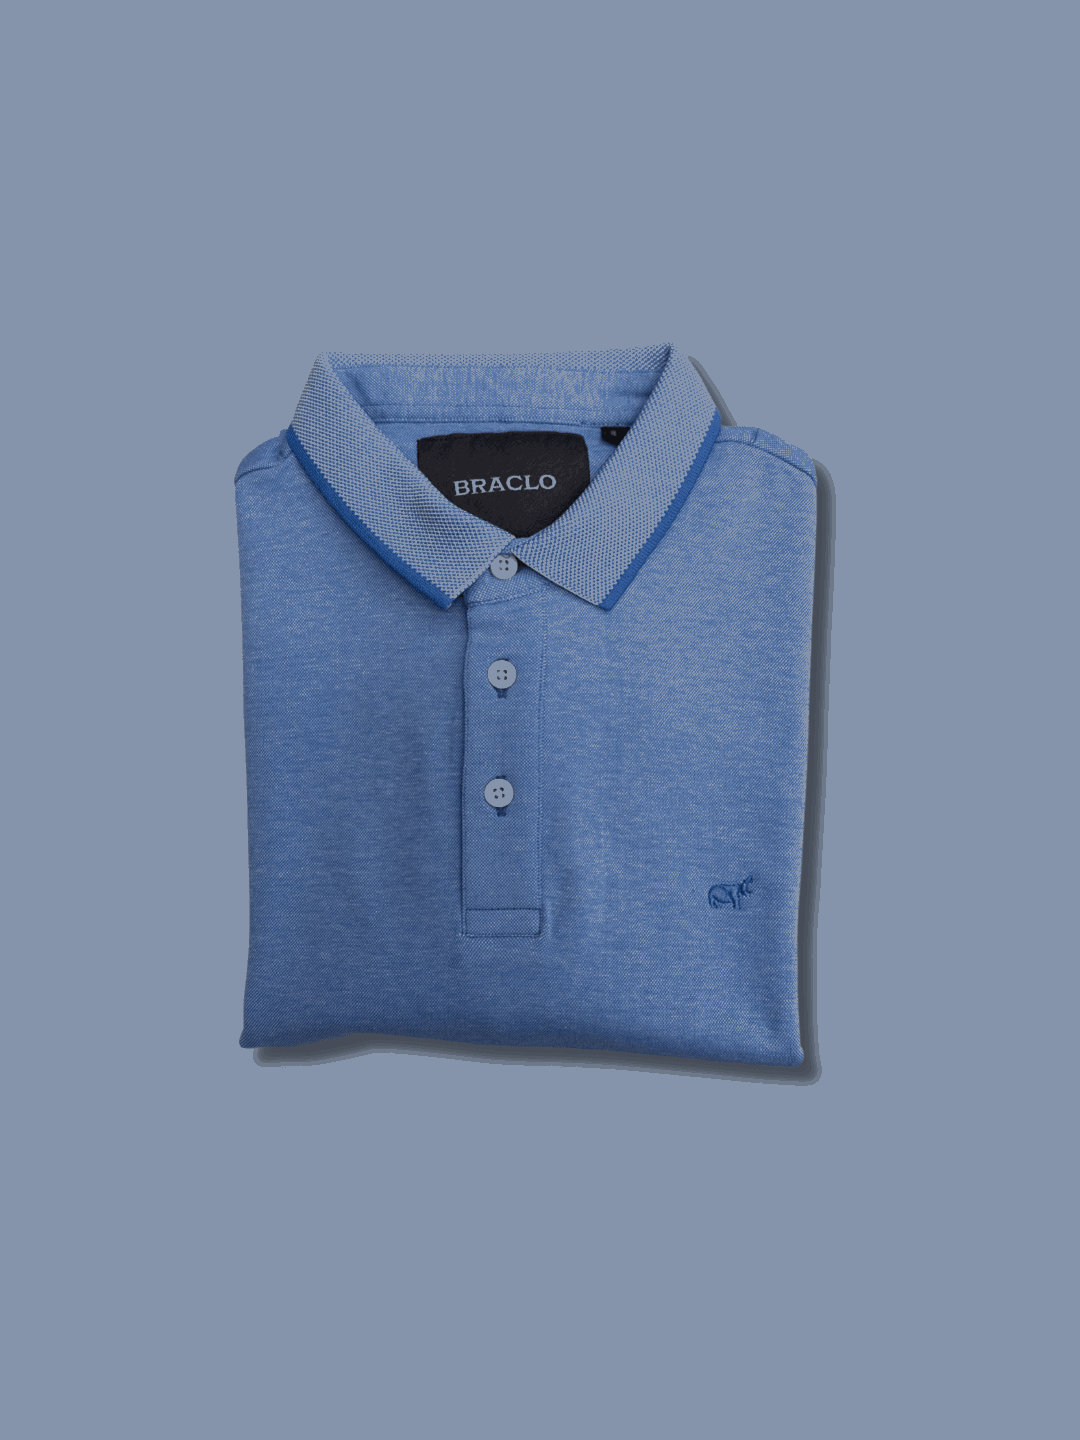 Polo T-Shirts for Men – Braclo